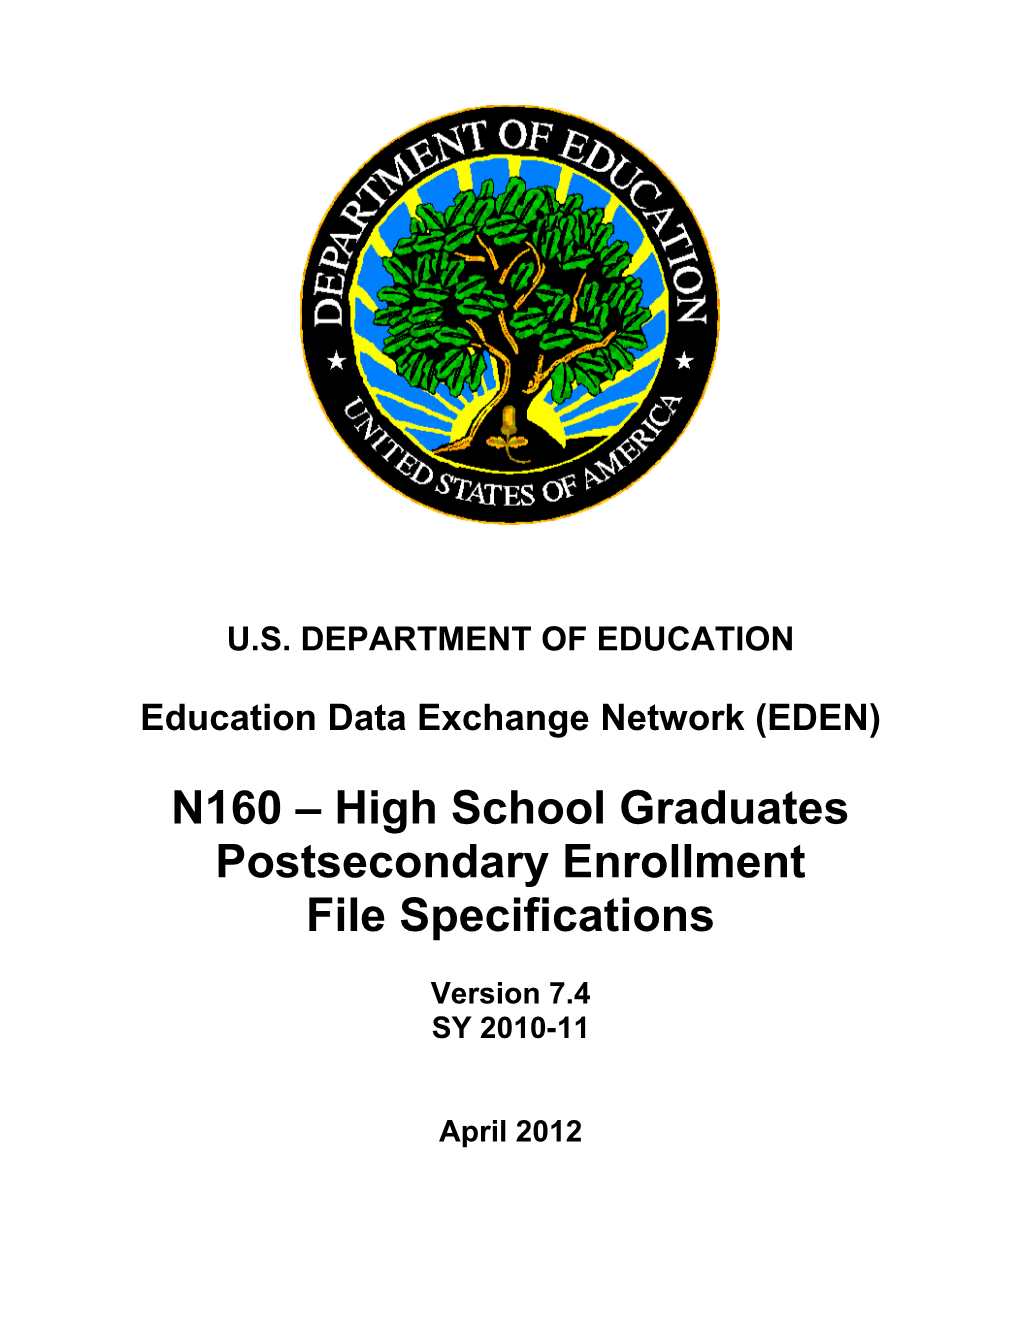 High School Graduates Postsecondary Enrollment File Specifications